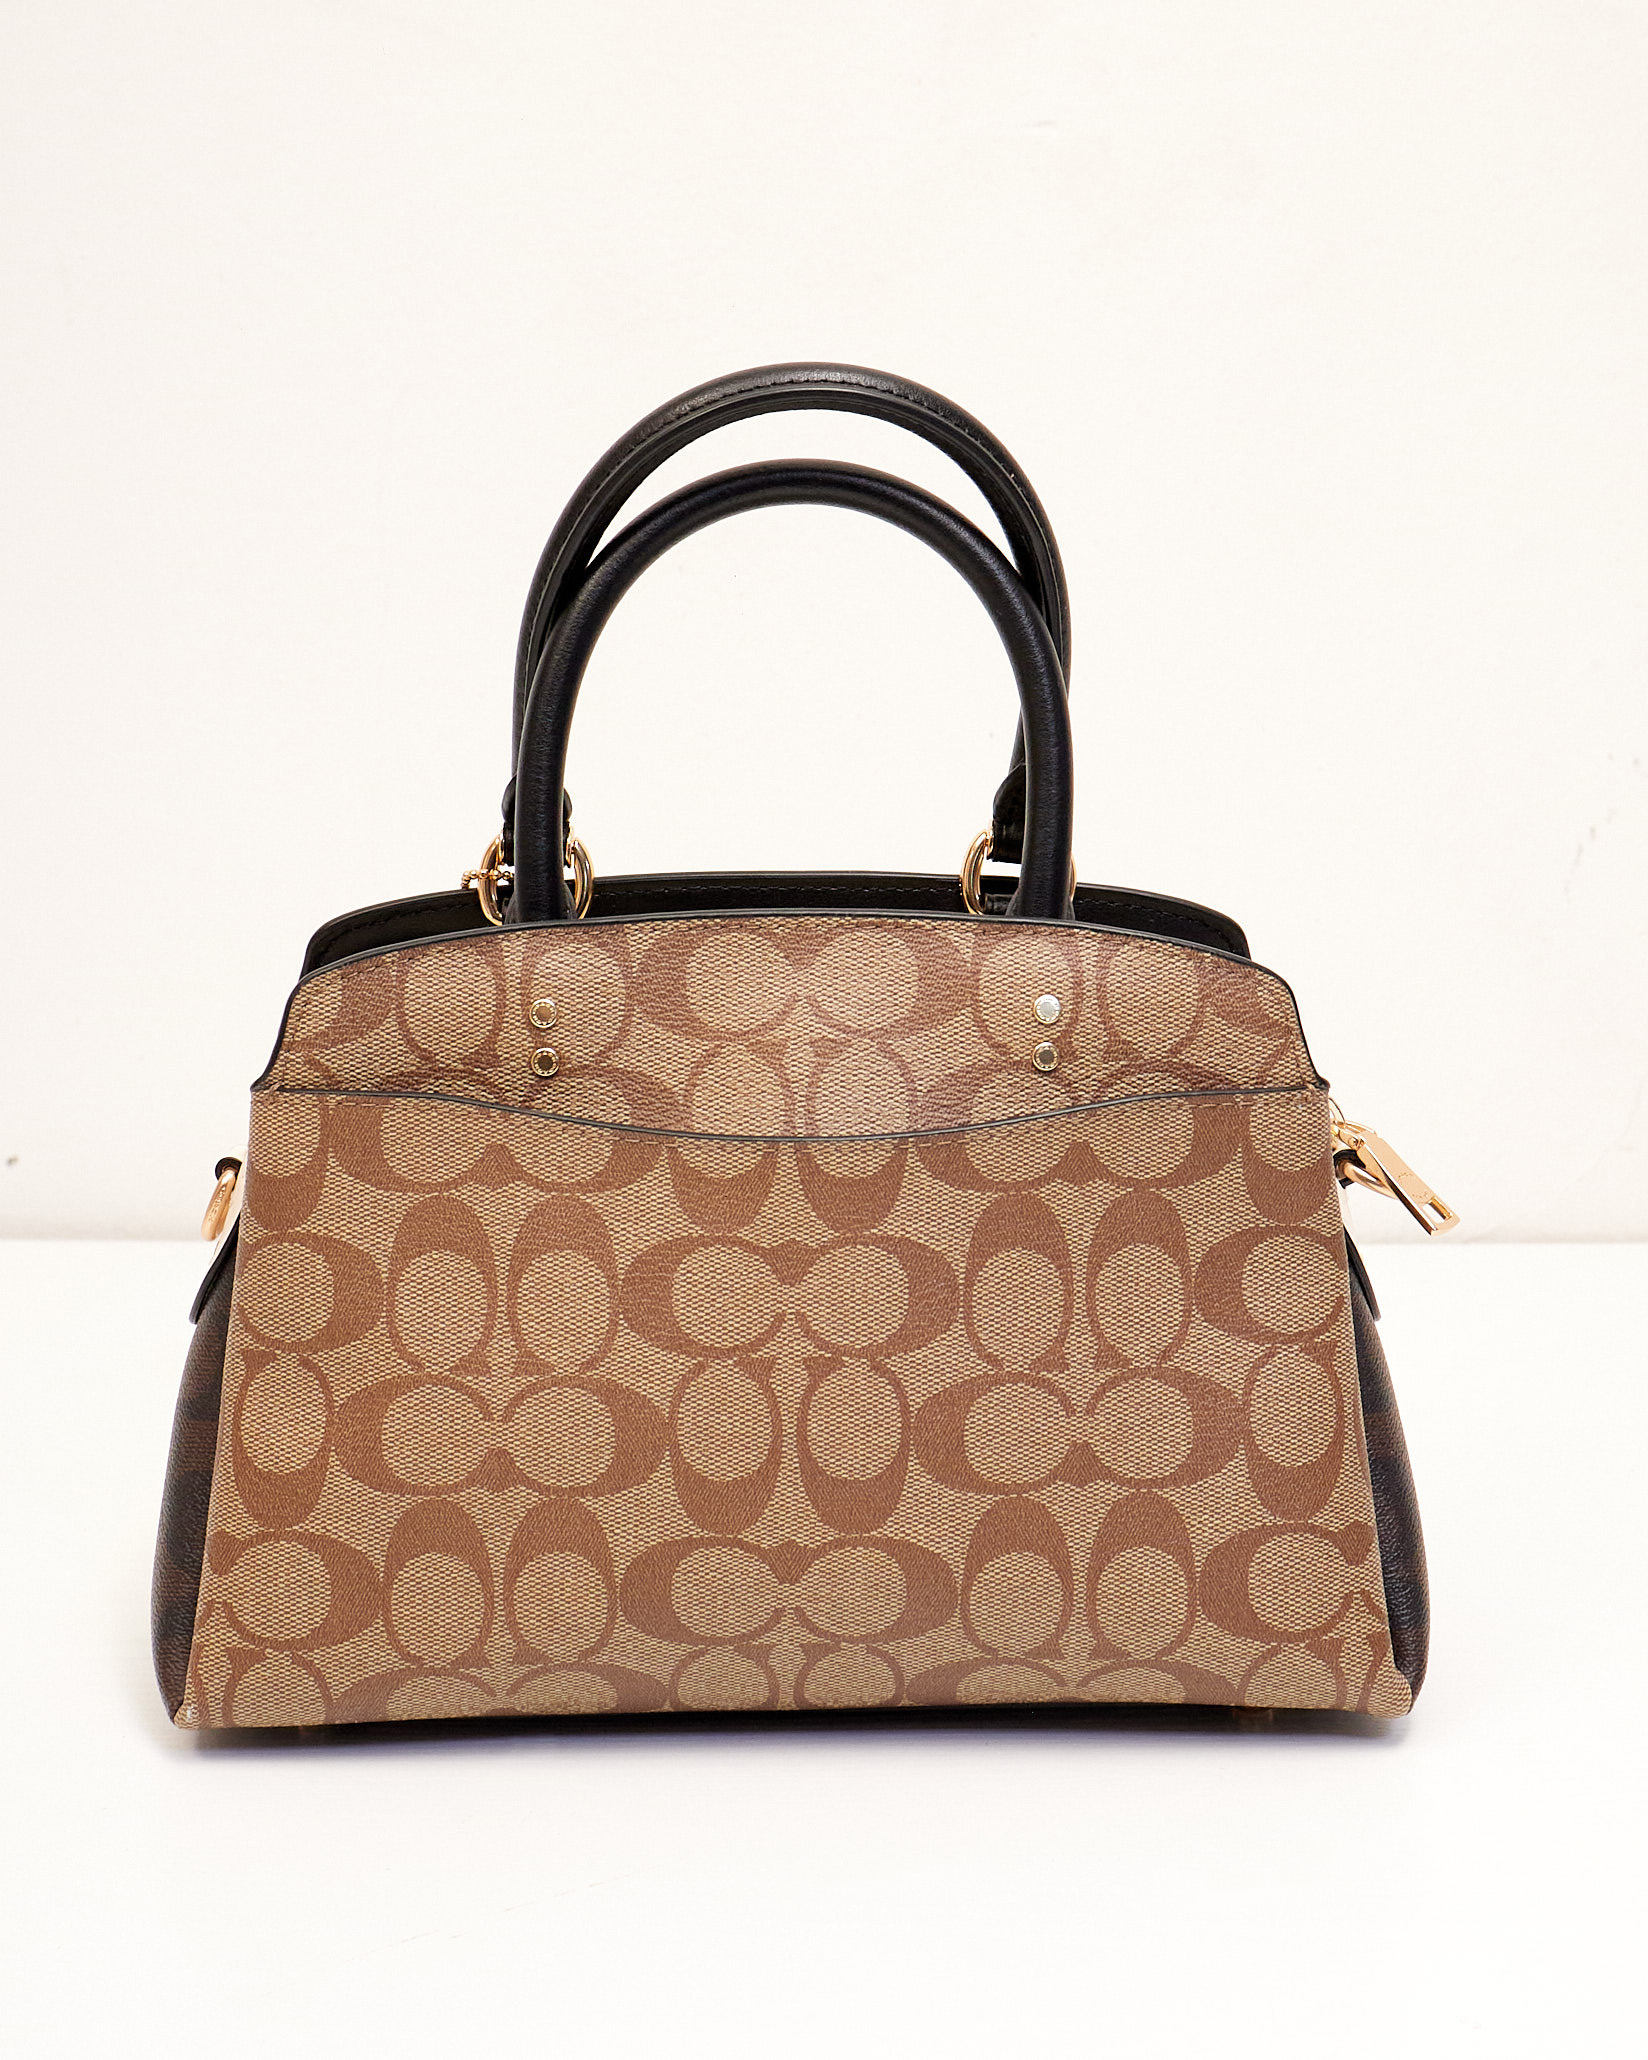 COACH Handbags for sale in Pittsburgh, Pennsylvania | Facebook Marketplace  | Facebook